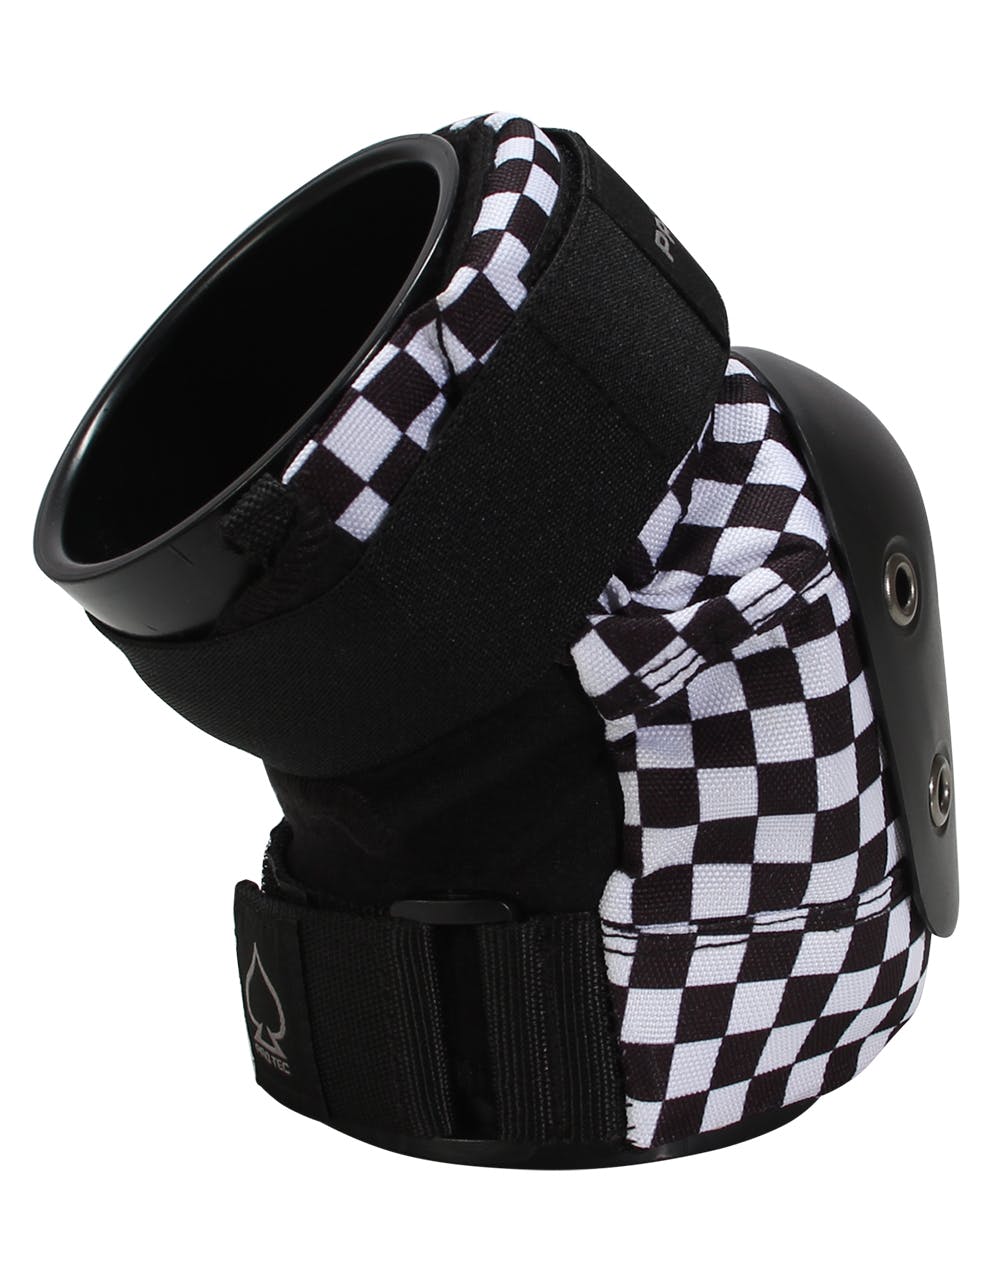 Pro-Tec Street Knee Pads - Black/White Checker